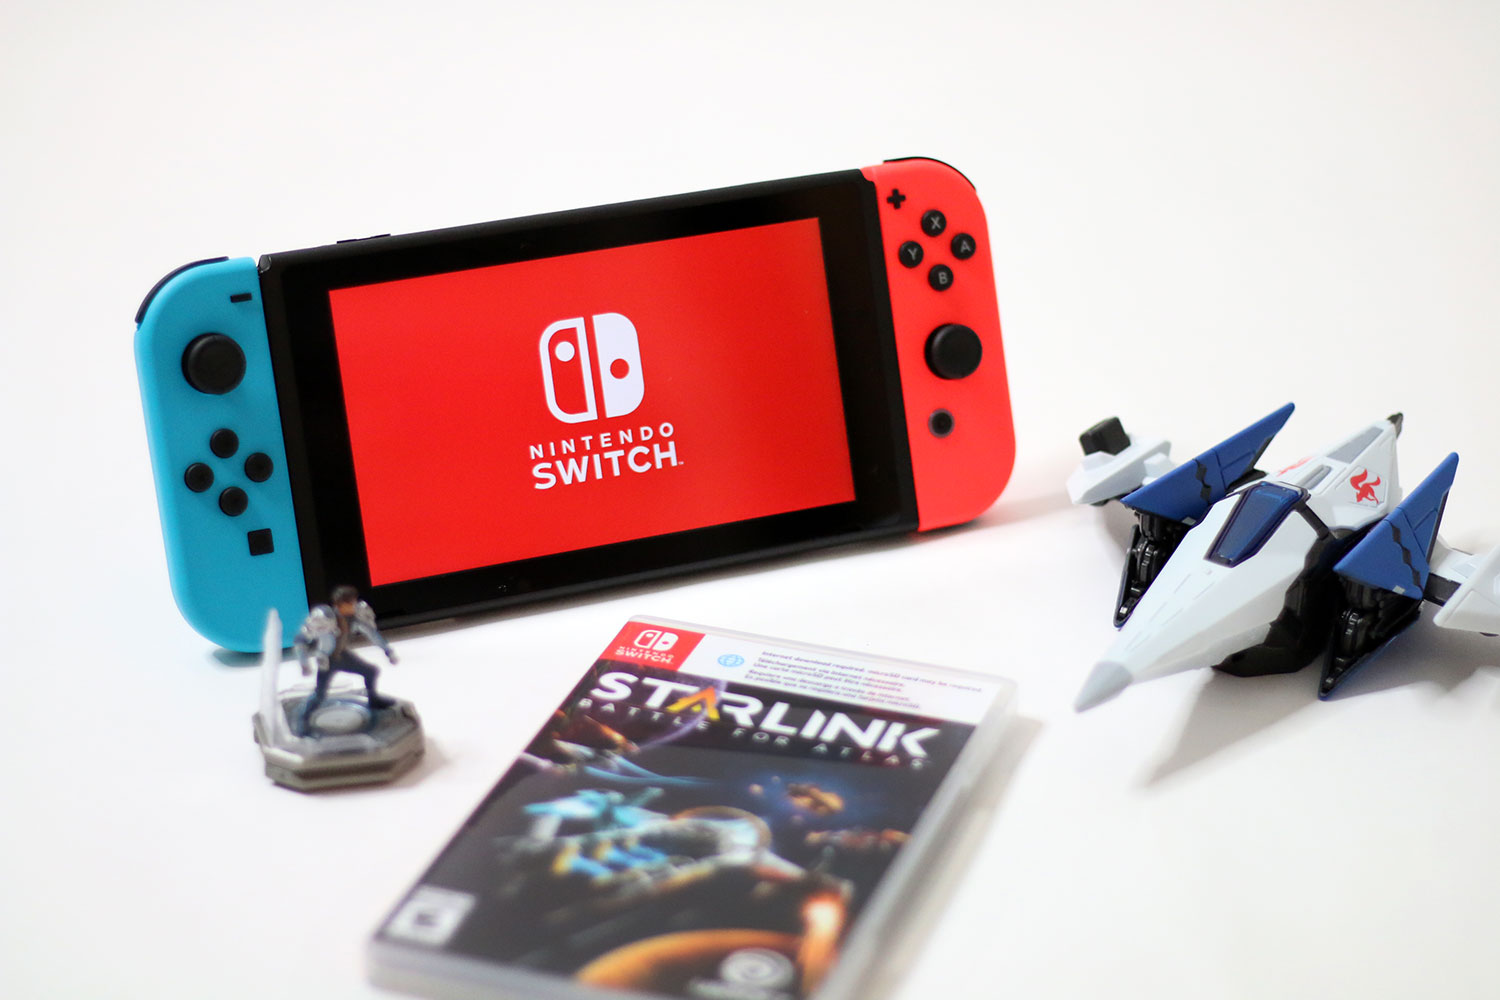  Starlink Battle for Atlas - Nintendo Switch Starter